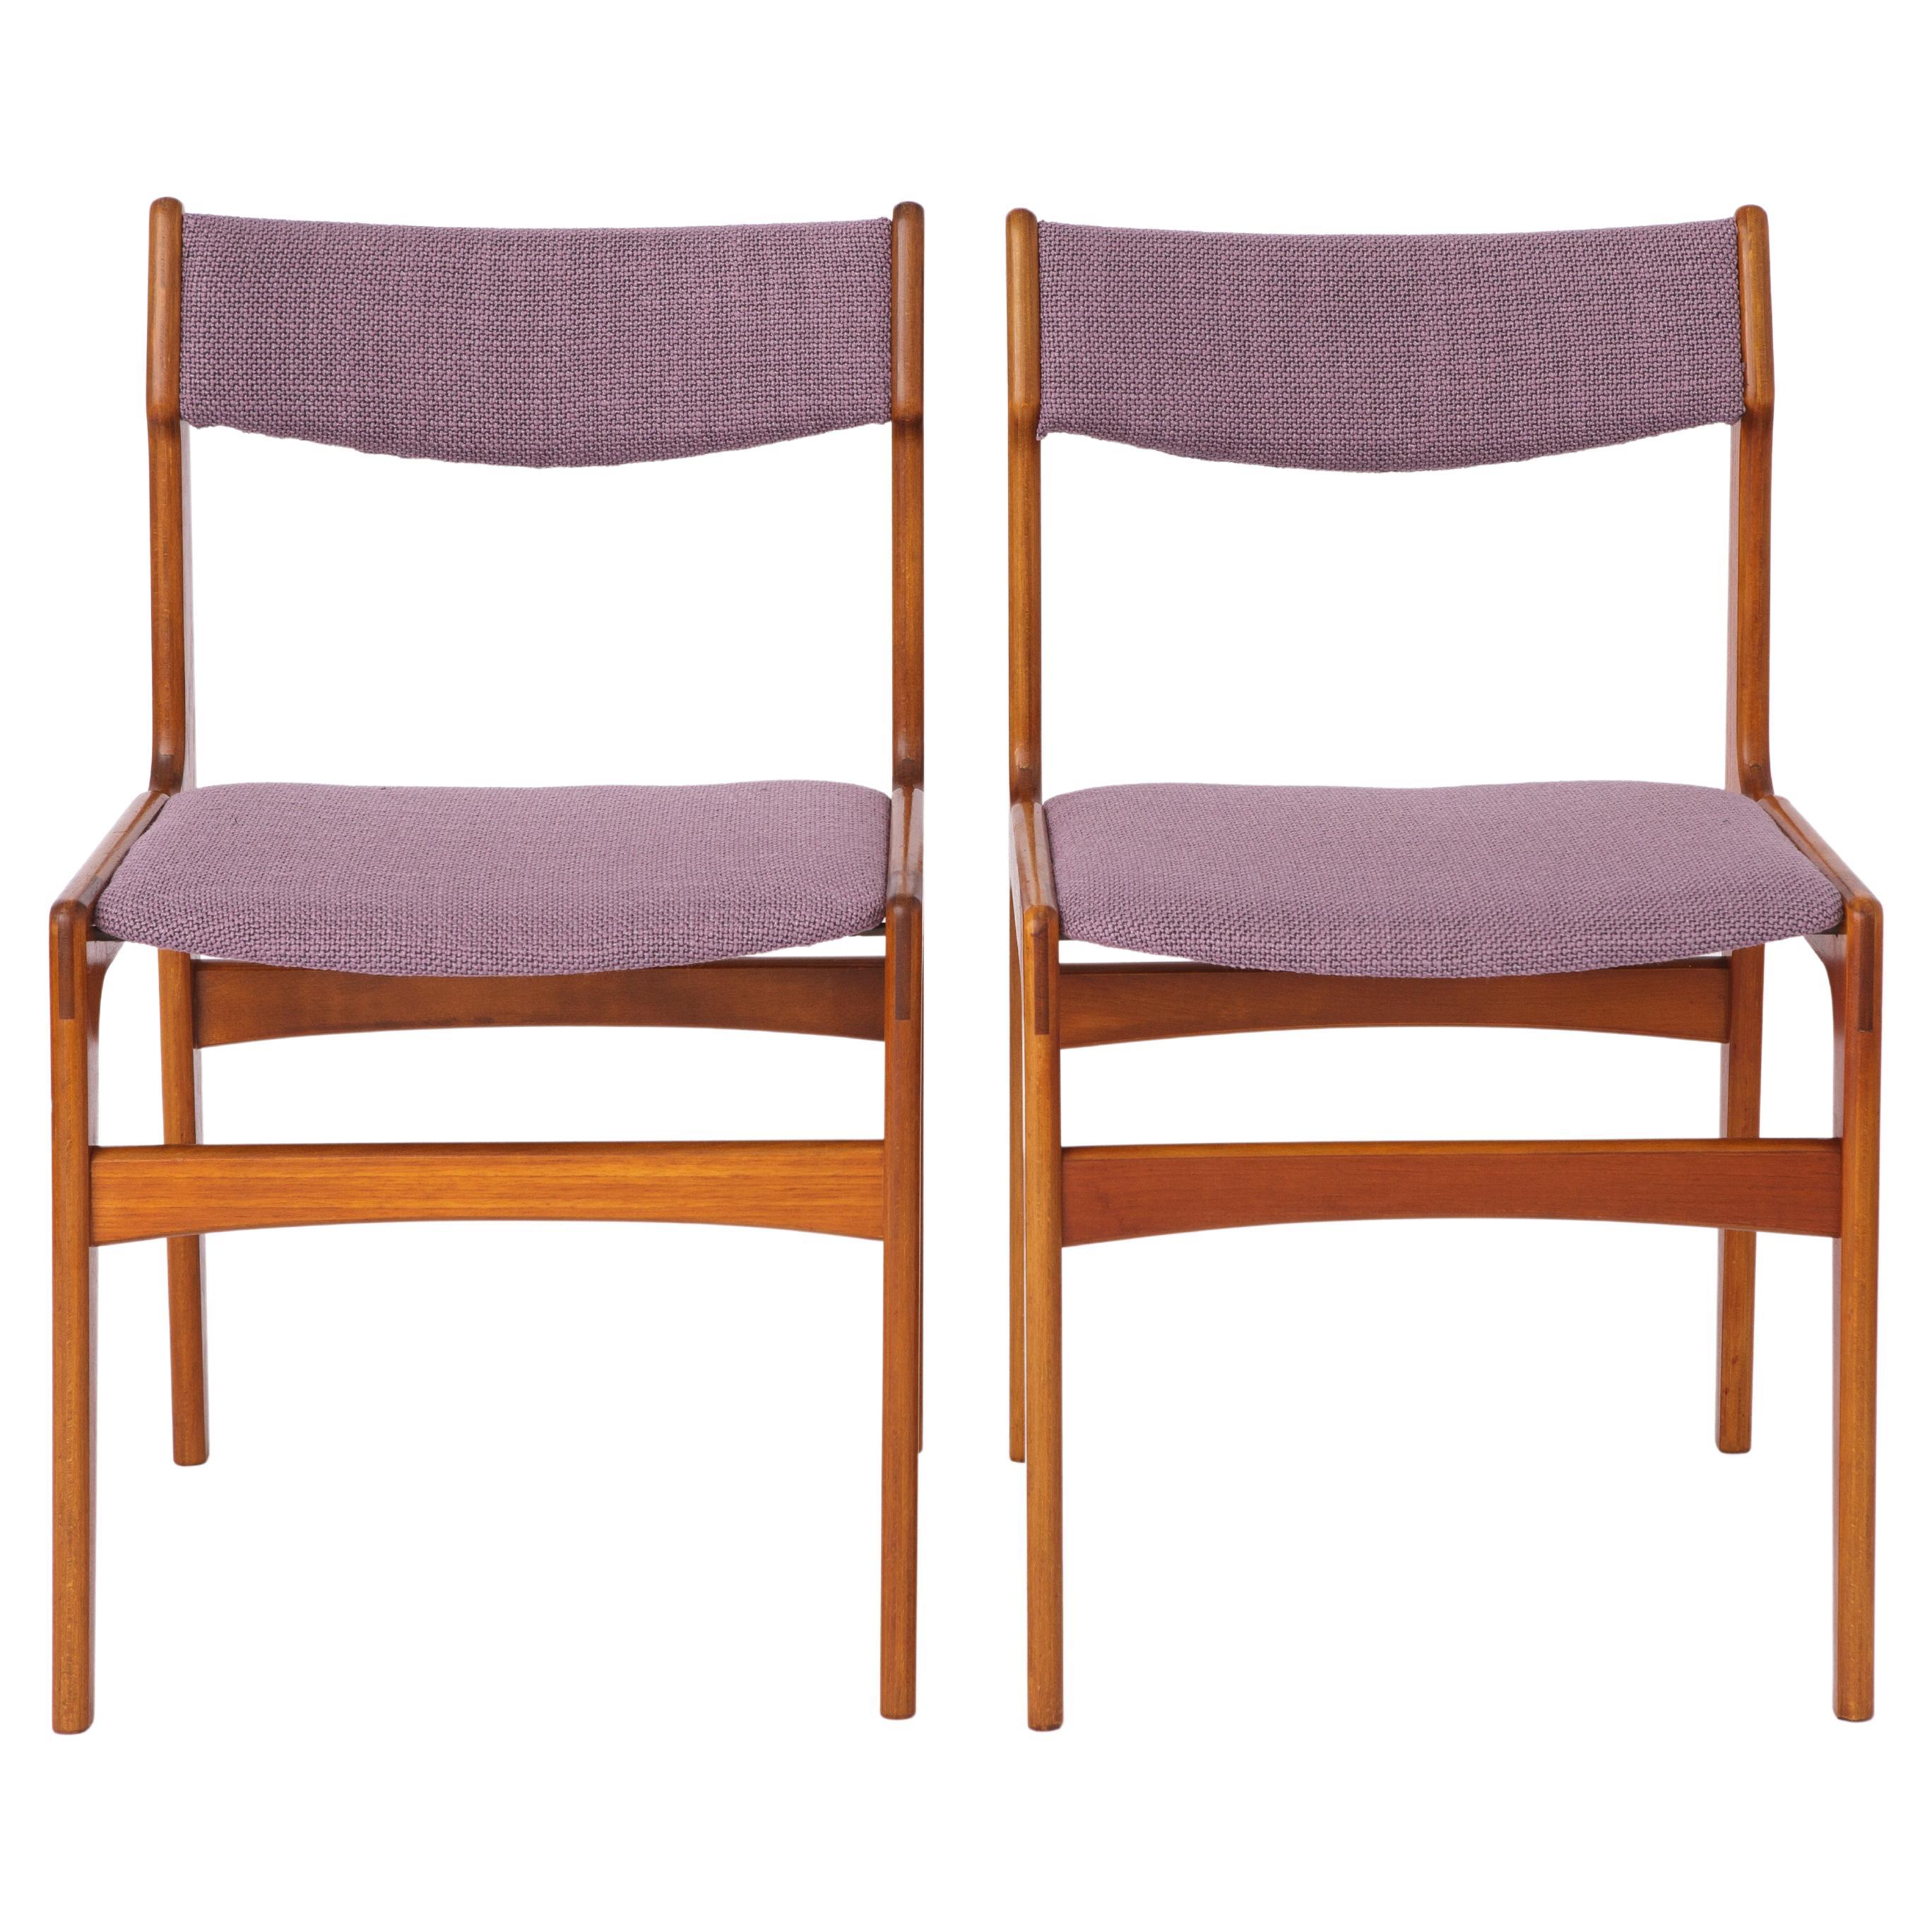 Pair mid century vintage chairs, 1960s, Danish